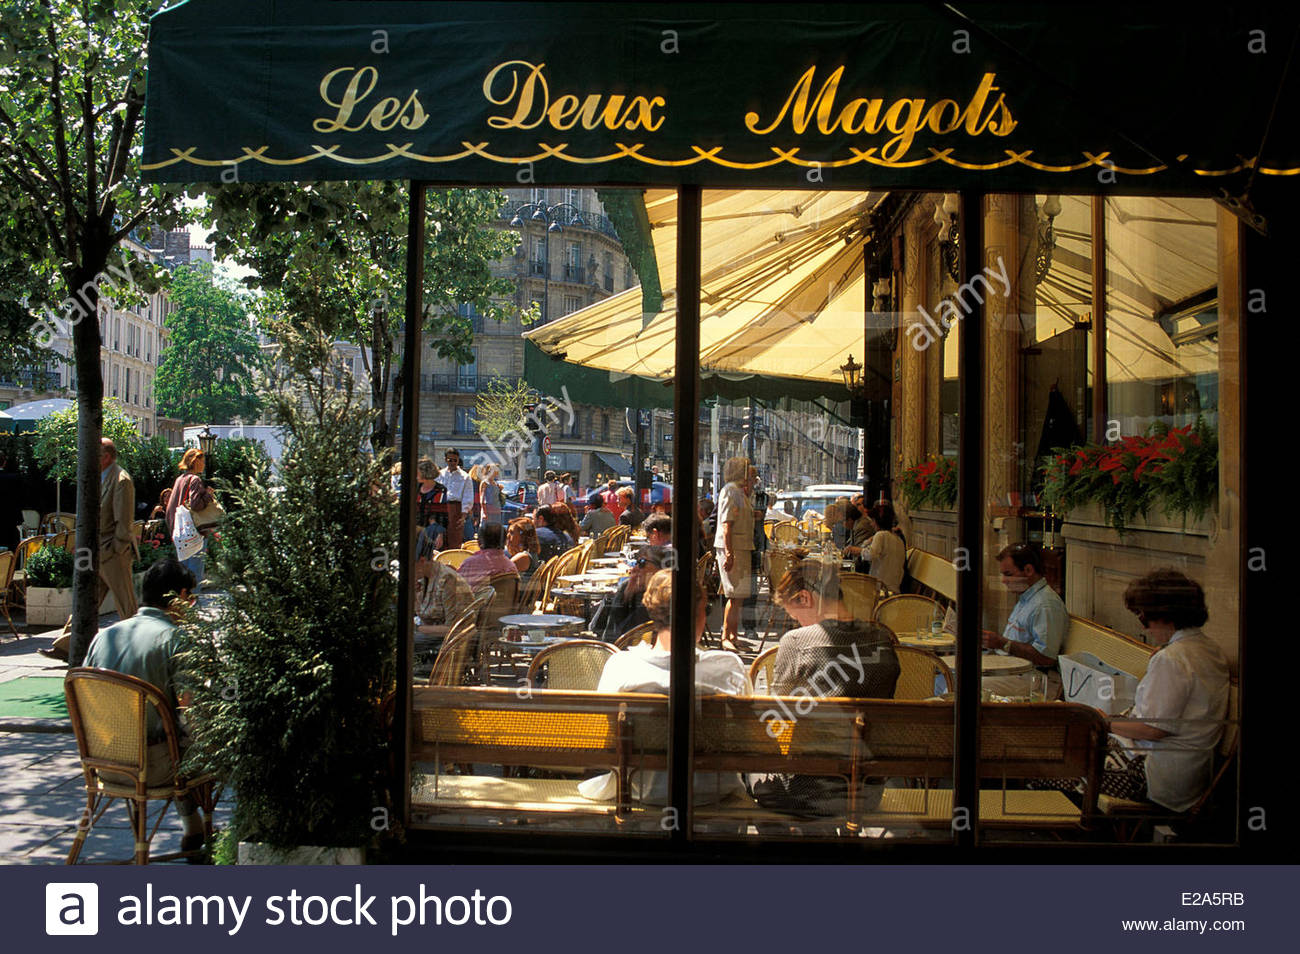 Risultati immagini per CAFFE' PARIS LES DEUX MAGOTS